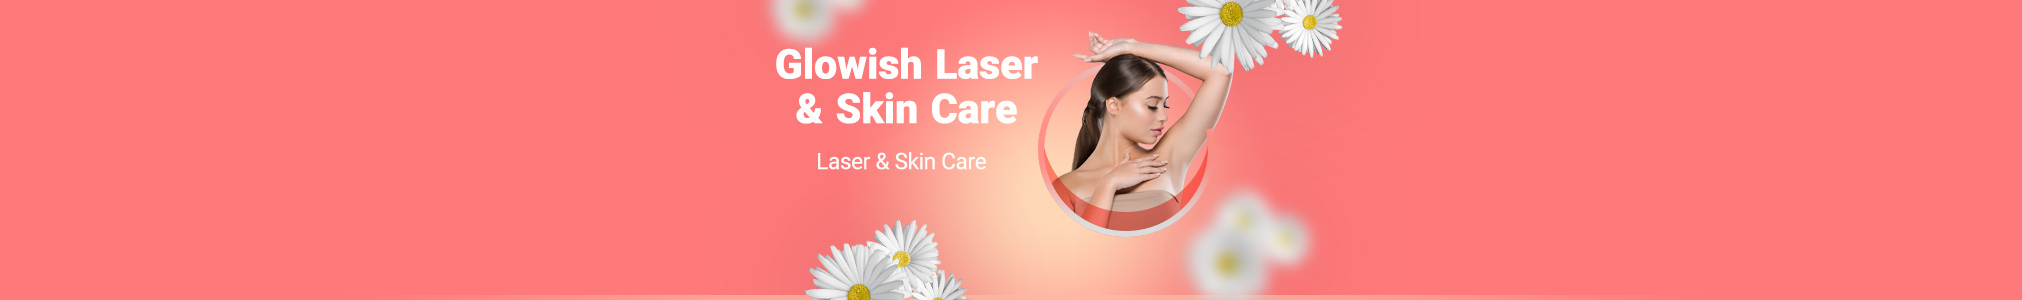 Glowish Laser & Skin Care